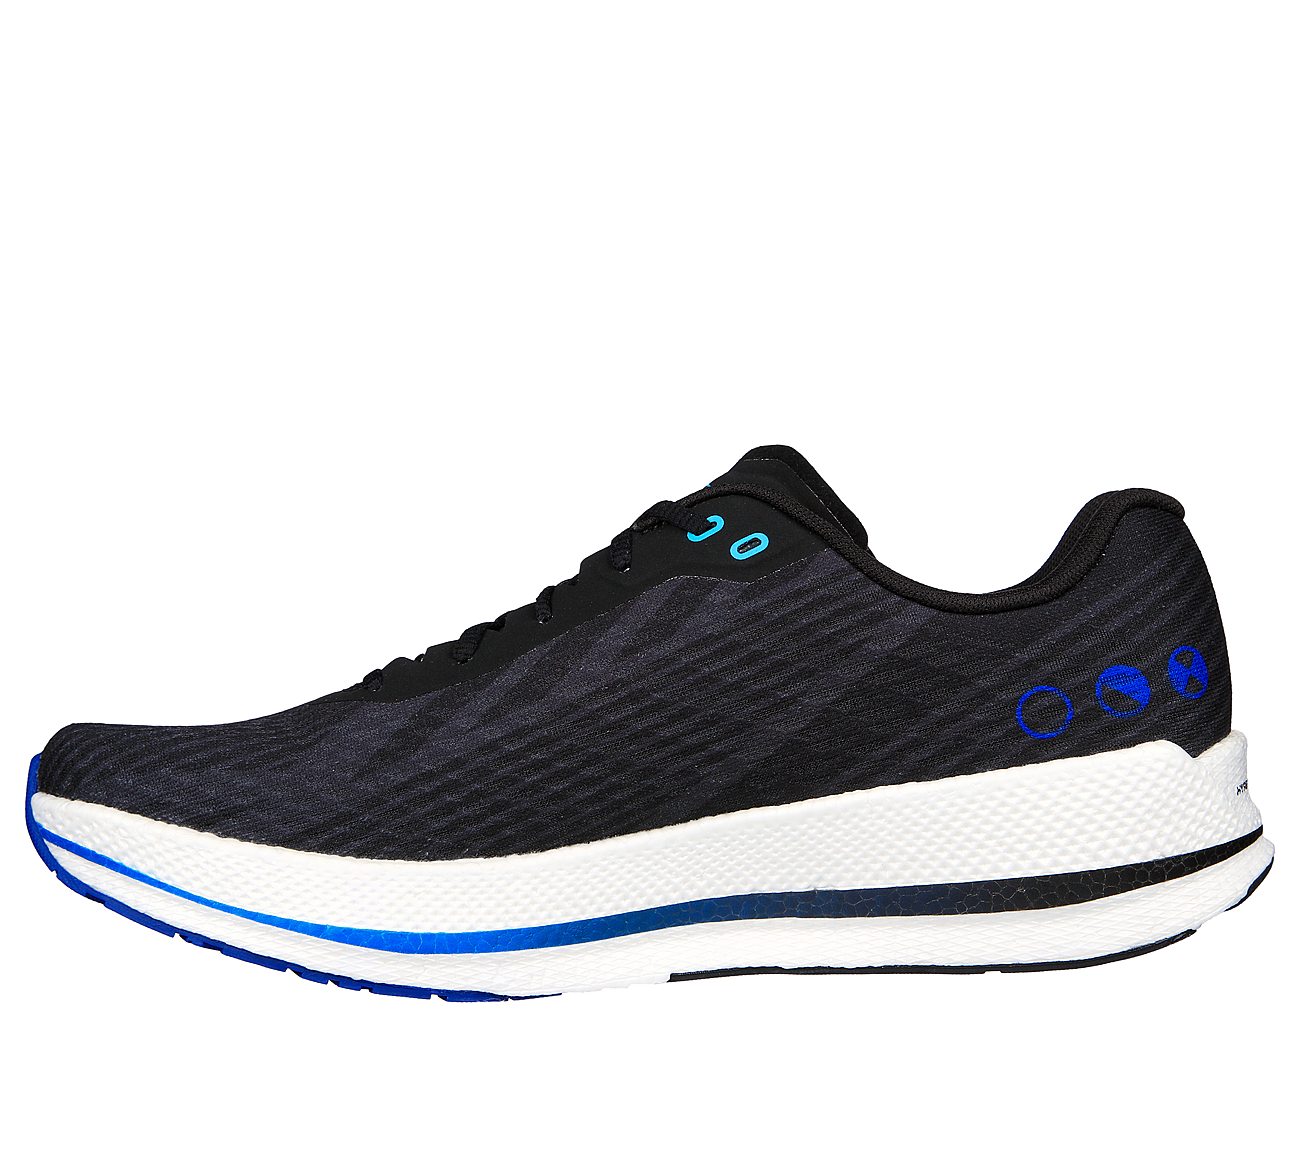 GO RUN RAZOR 4, BLACK/BLUE Footwear Left View